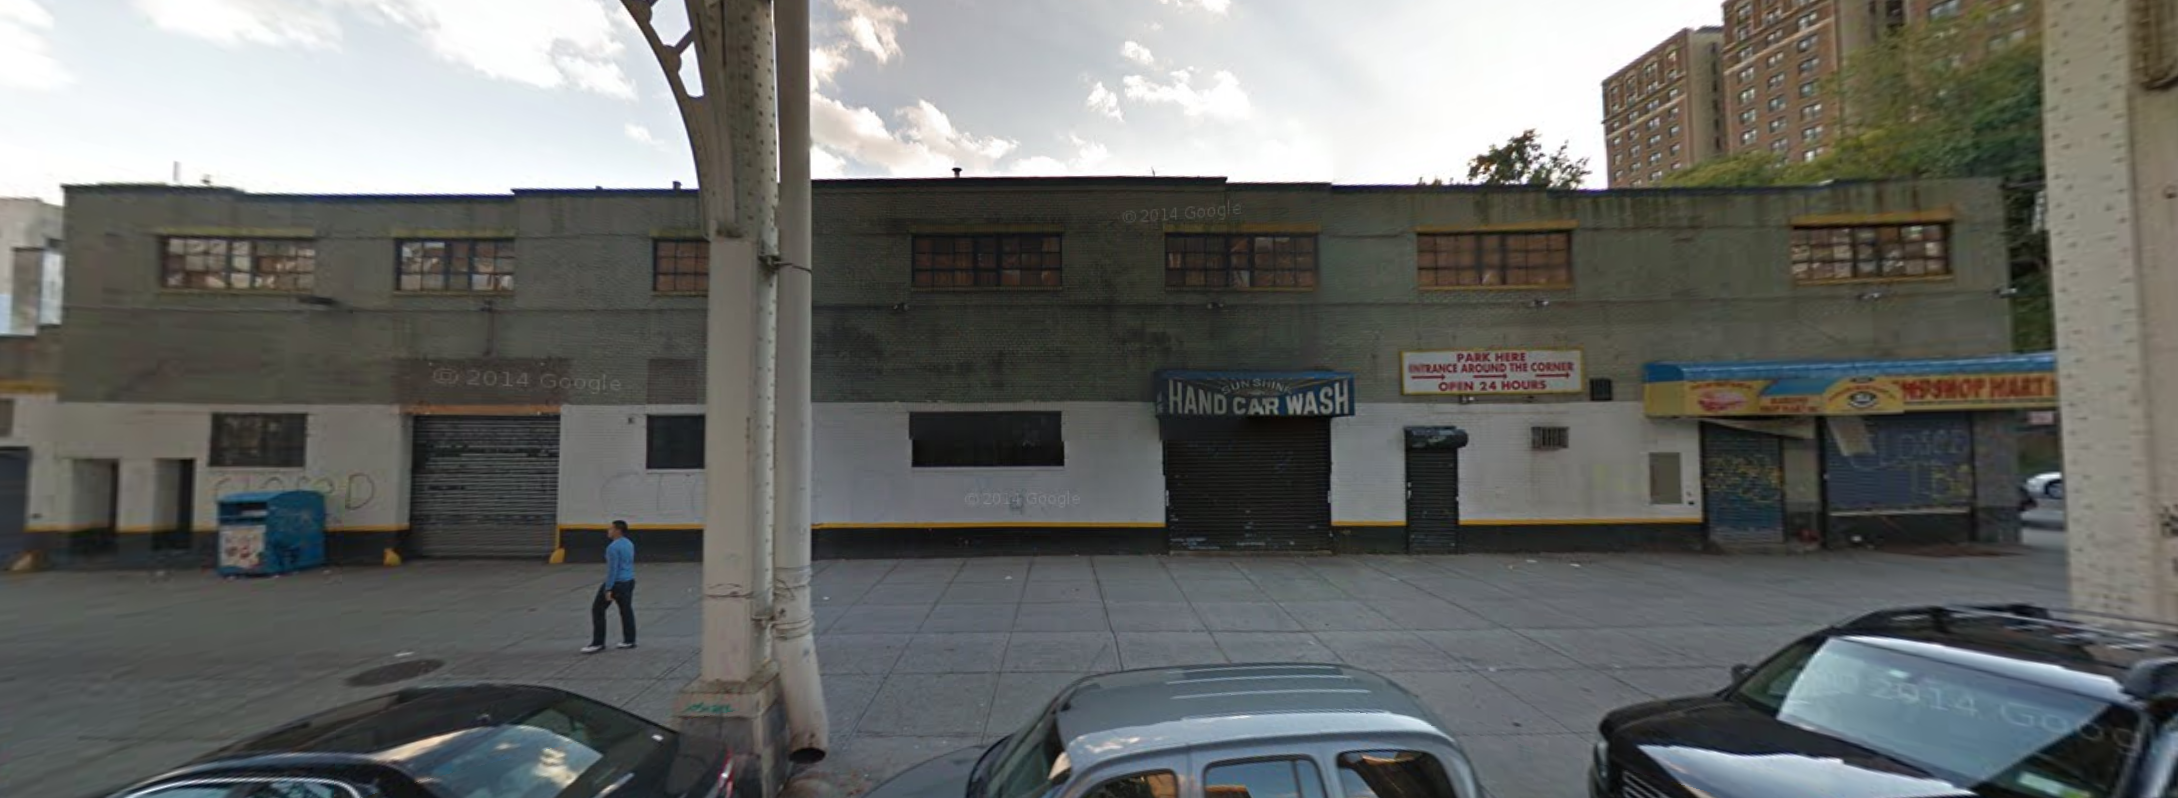 250 Bradhurst Avenue, image via Google Maps